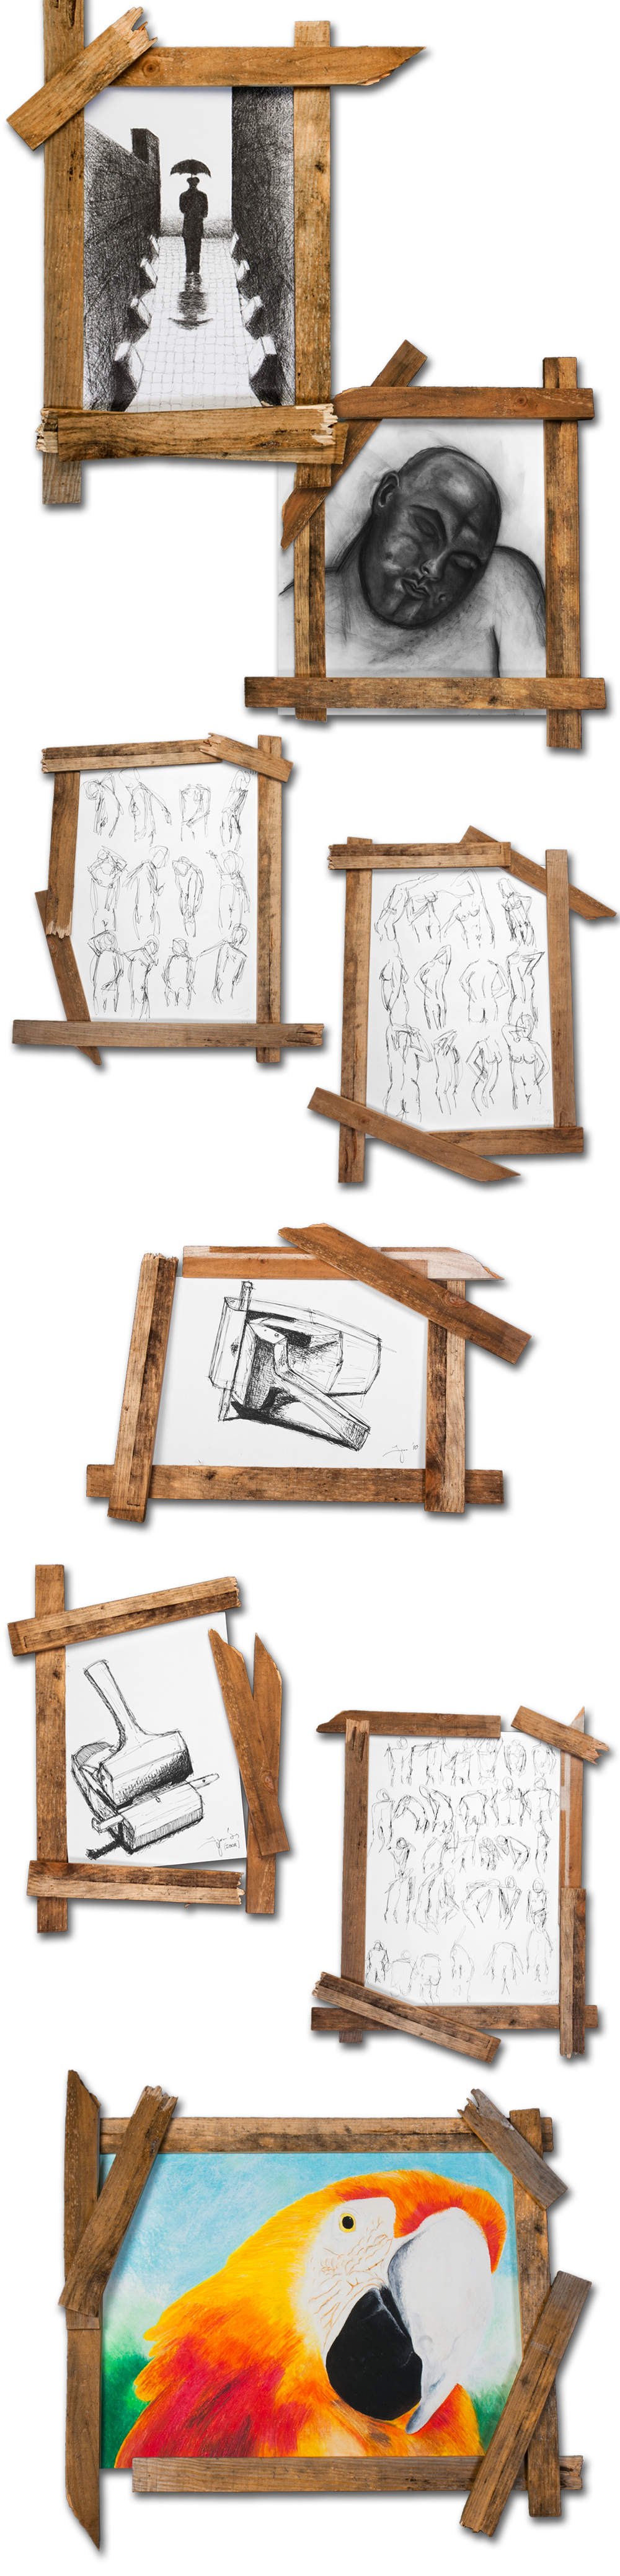 frame wood sketches pencil draw exercises crashed broken